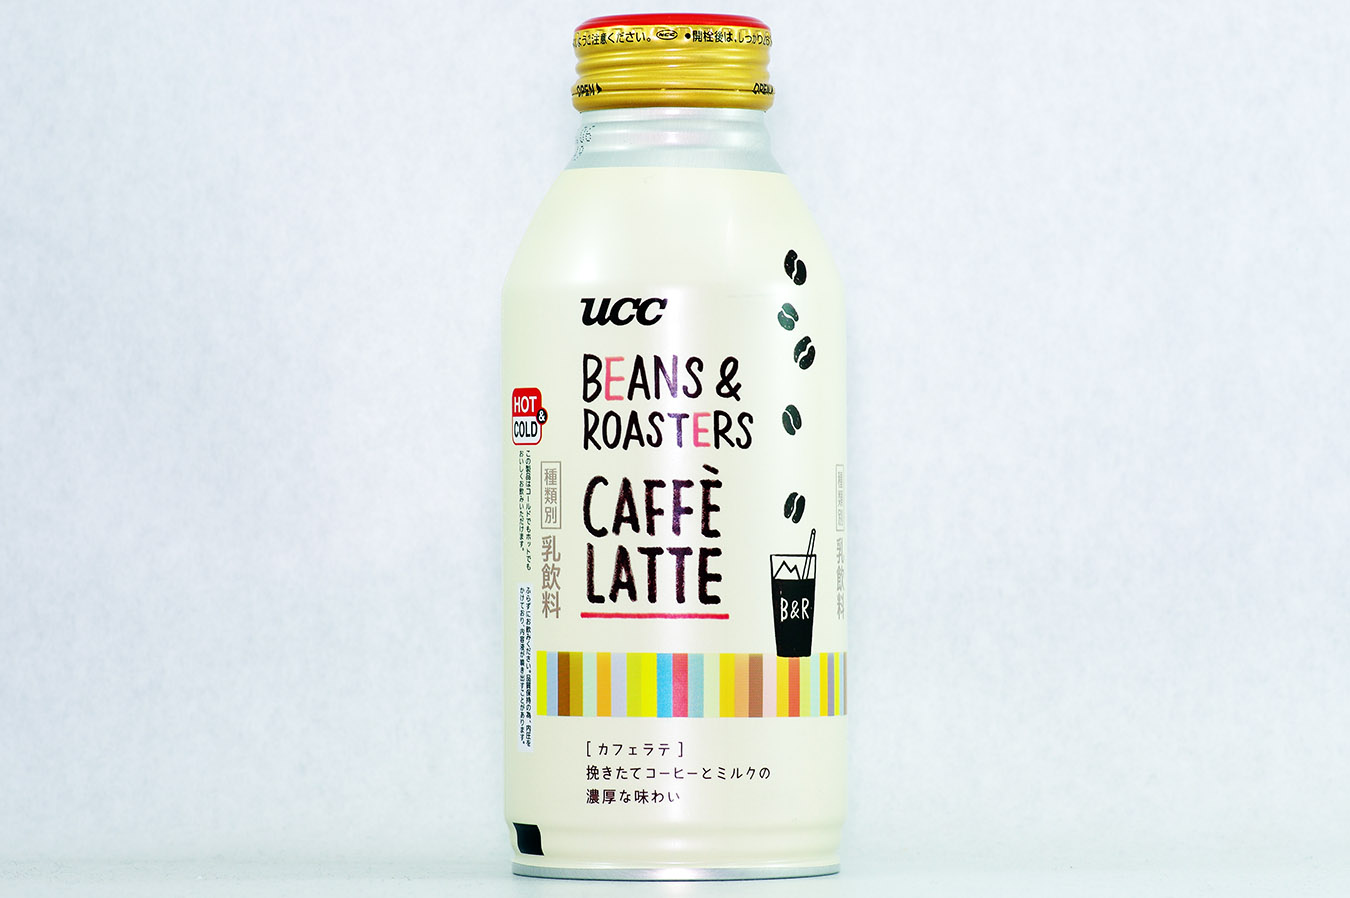 UCC BEANS & ROASTERS CAFFÈ LATTE 375gボトル缶 2016年4月